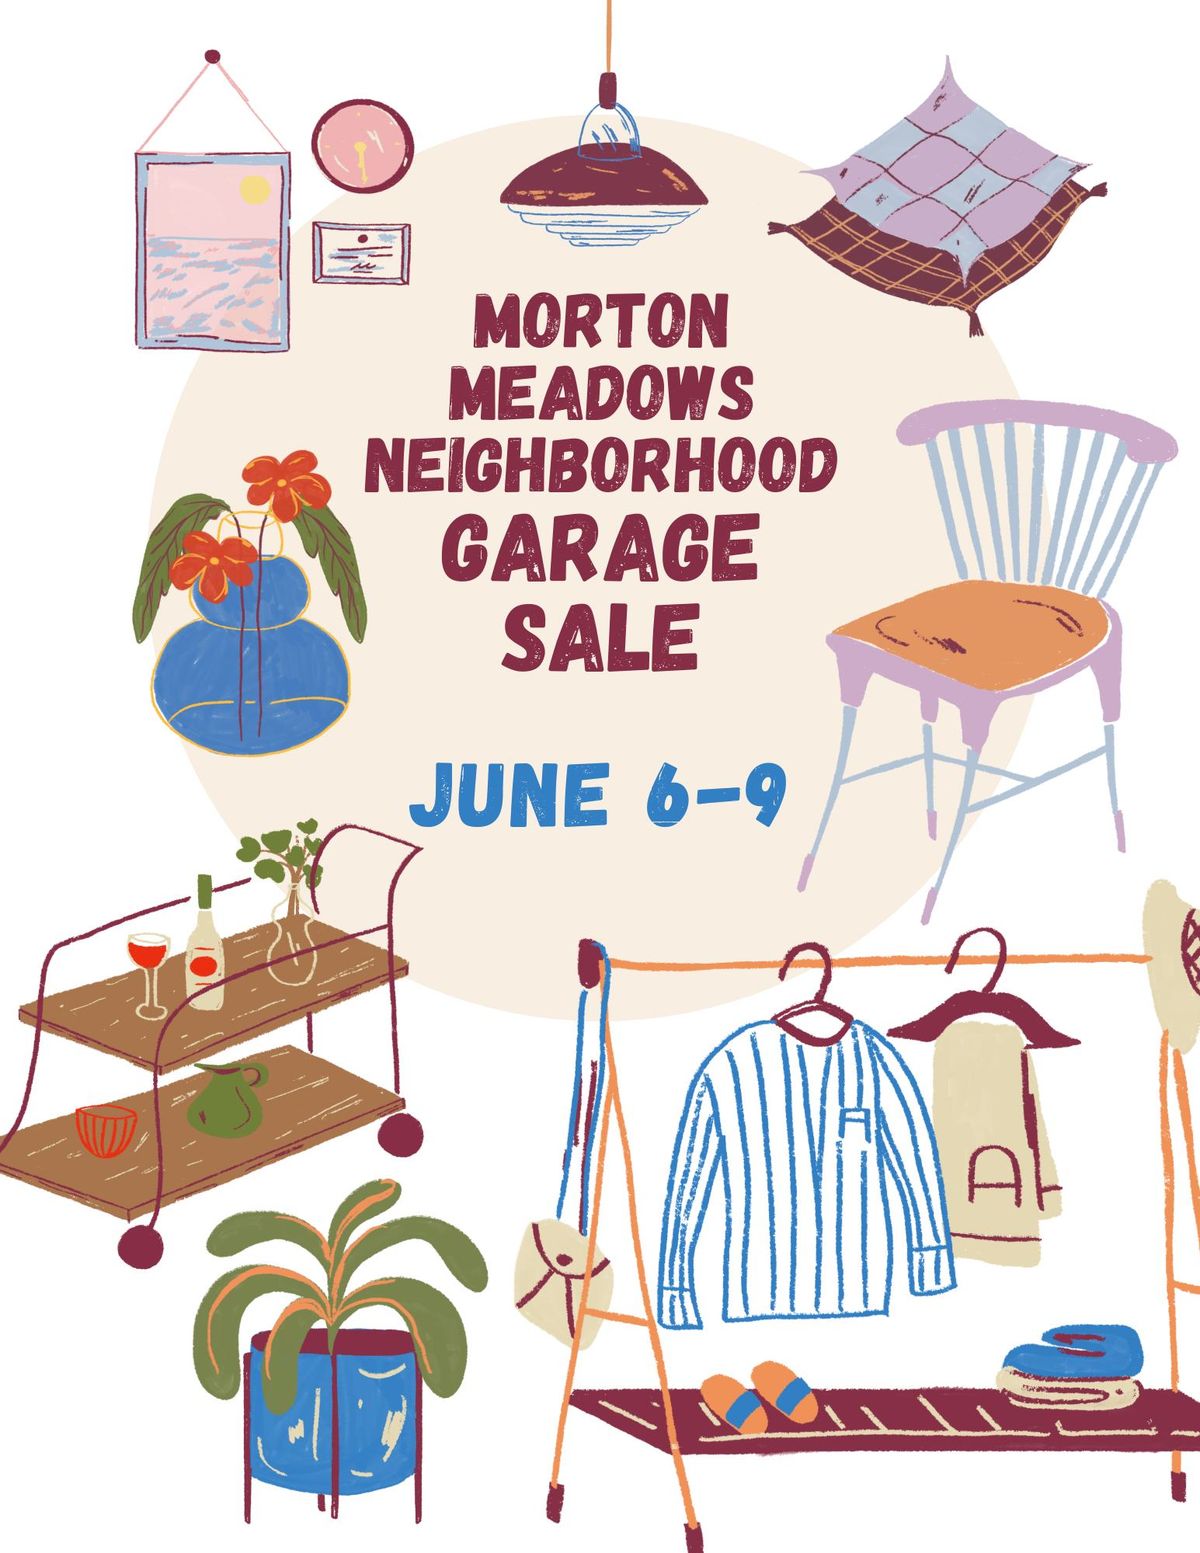 Annual Neighborhood Garage Sales